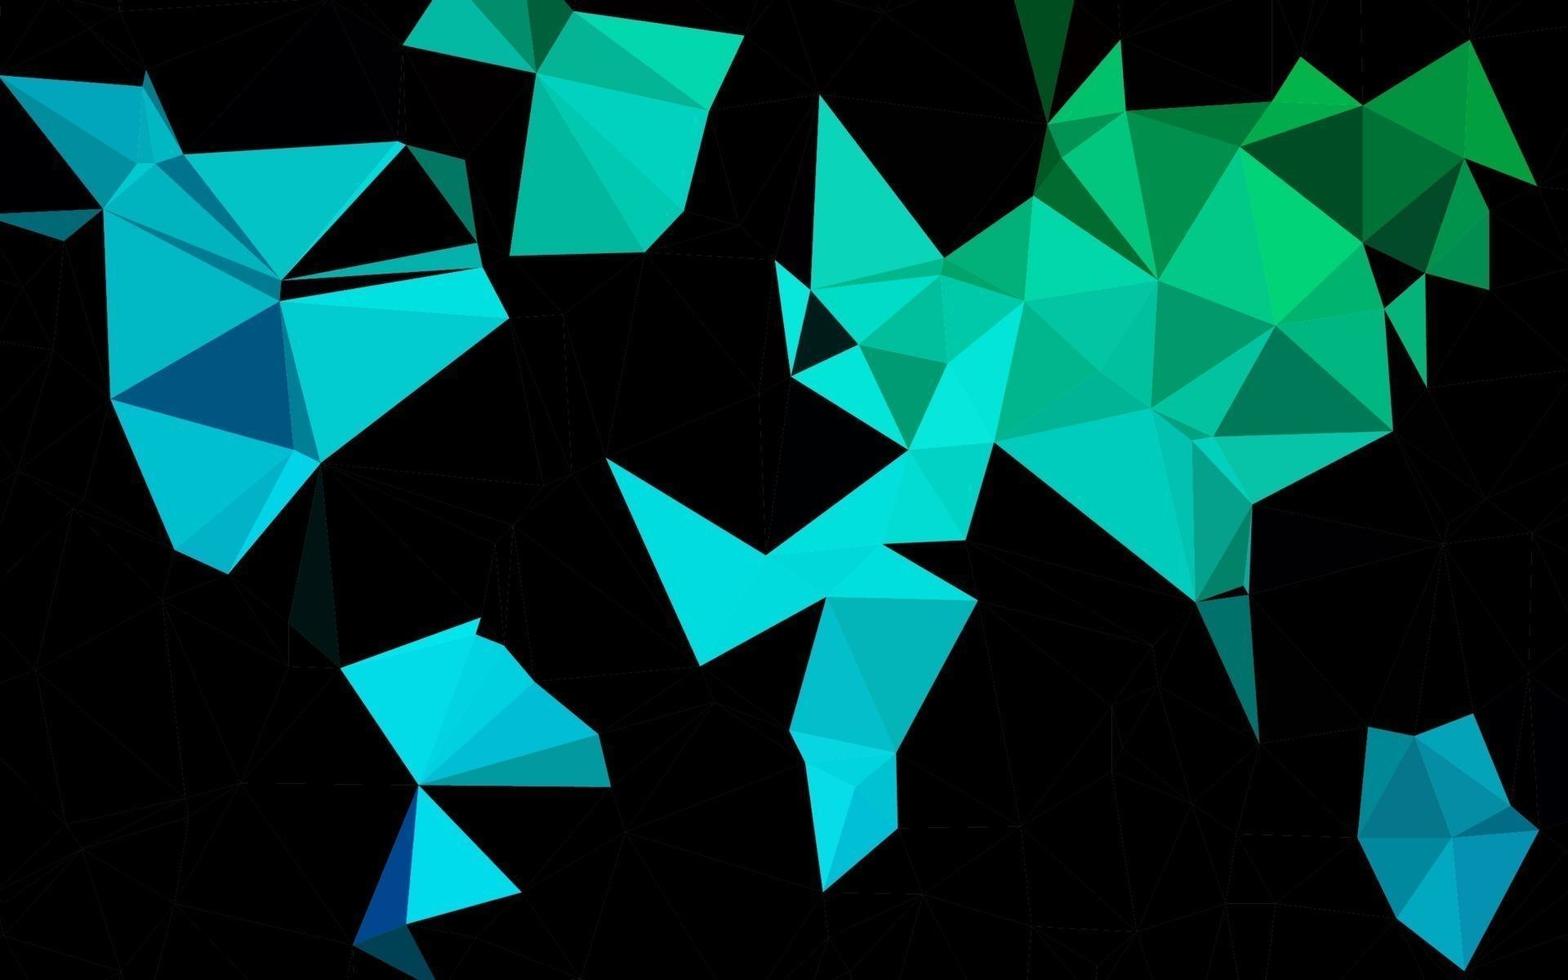 mörkblå, grön vektor lysande triangulärt mönster.